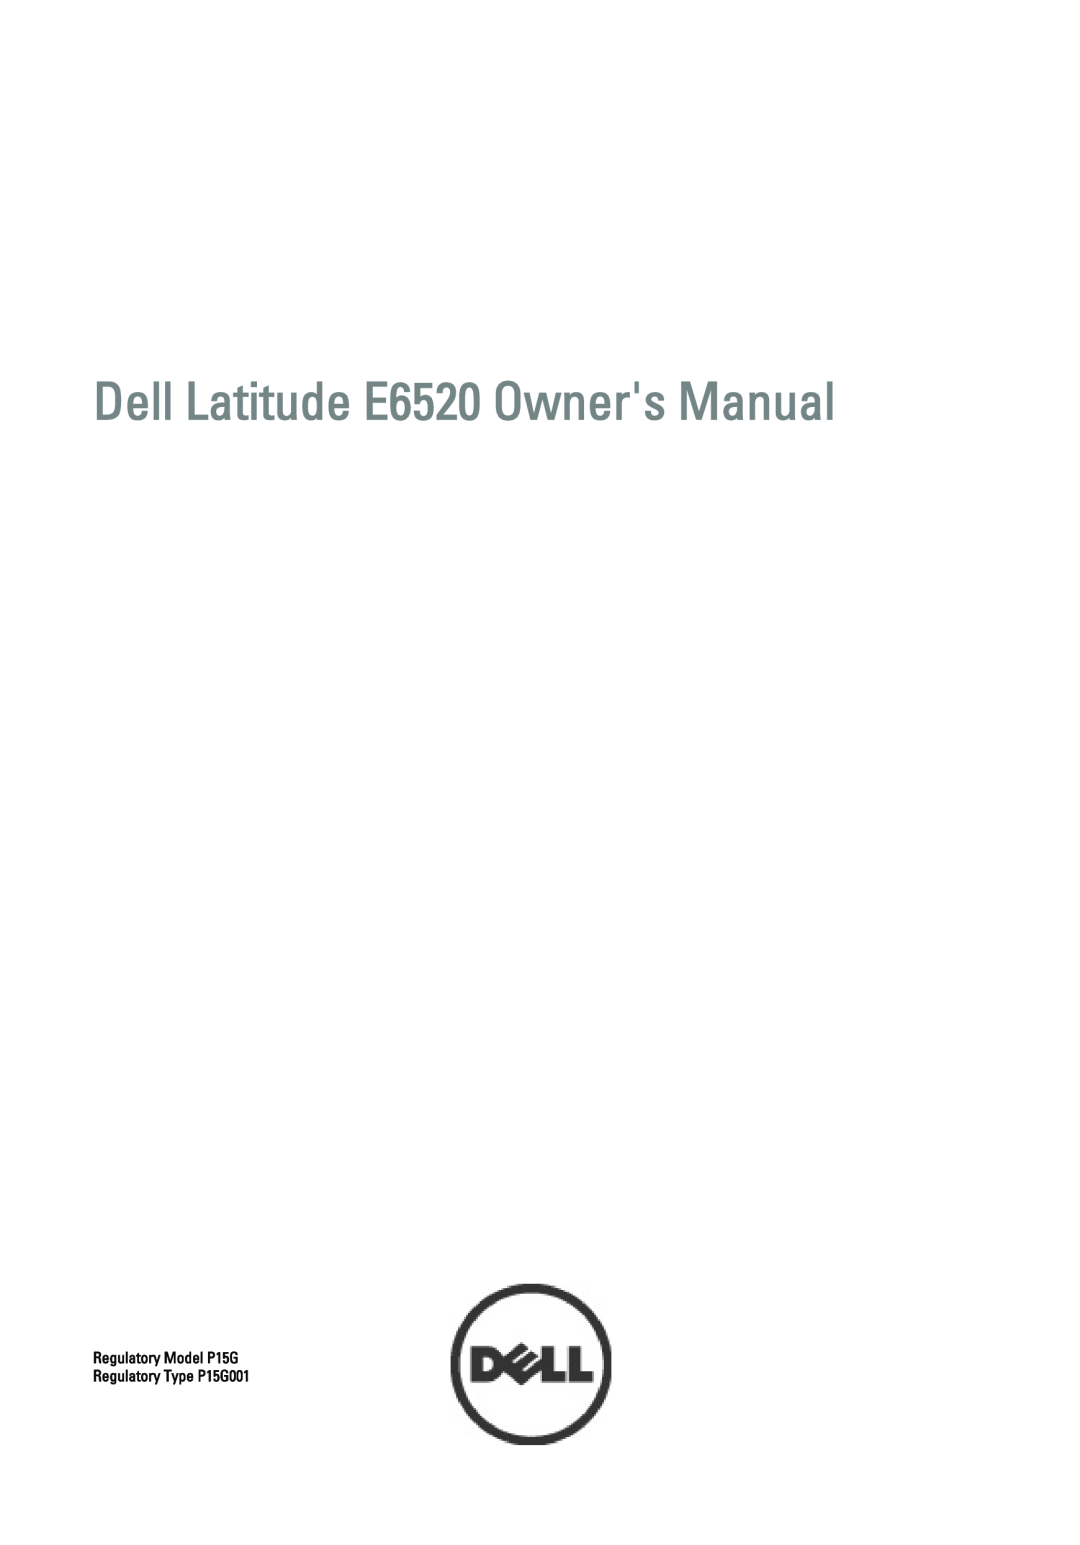 Dell owner manual Dell Latitude E6520 Owners Manual, Regulatory Model P15G Regulatory Type P15G001 